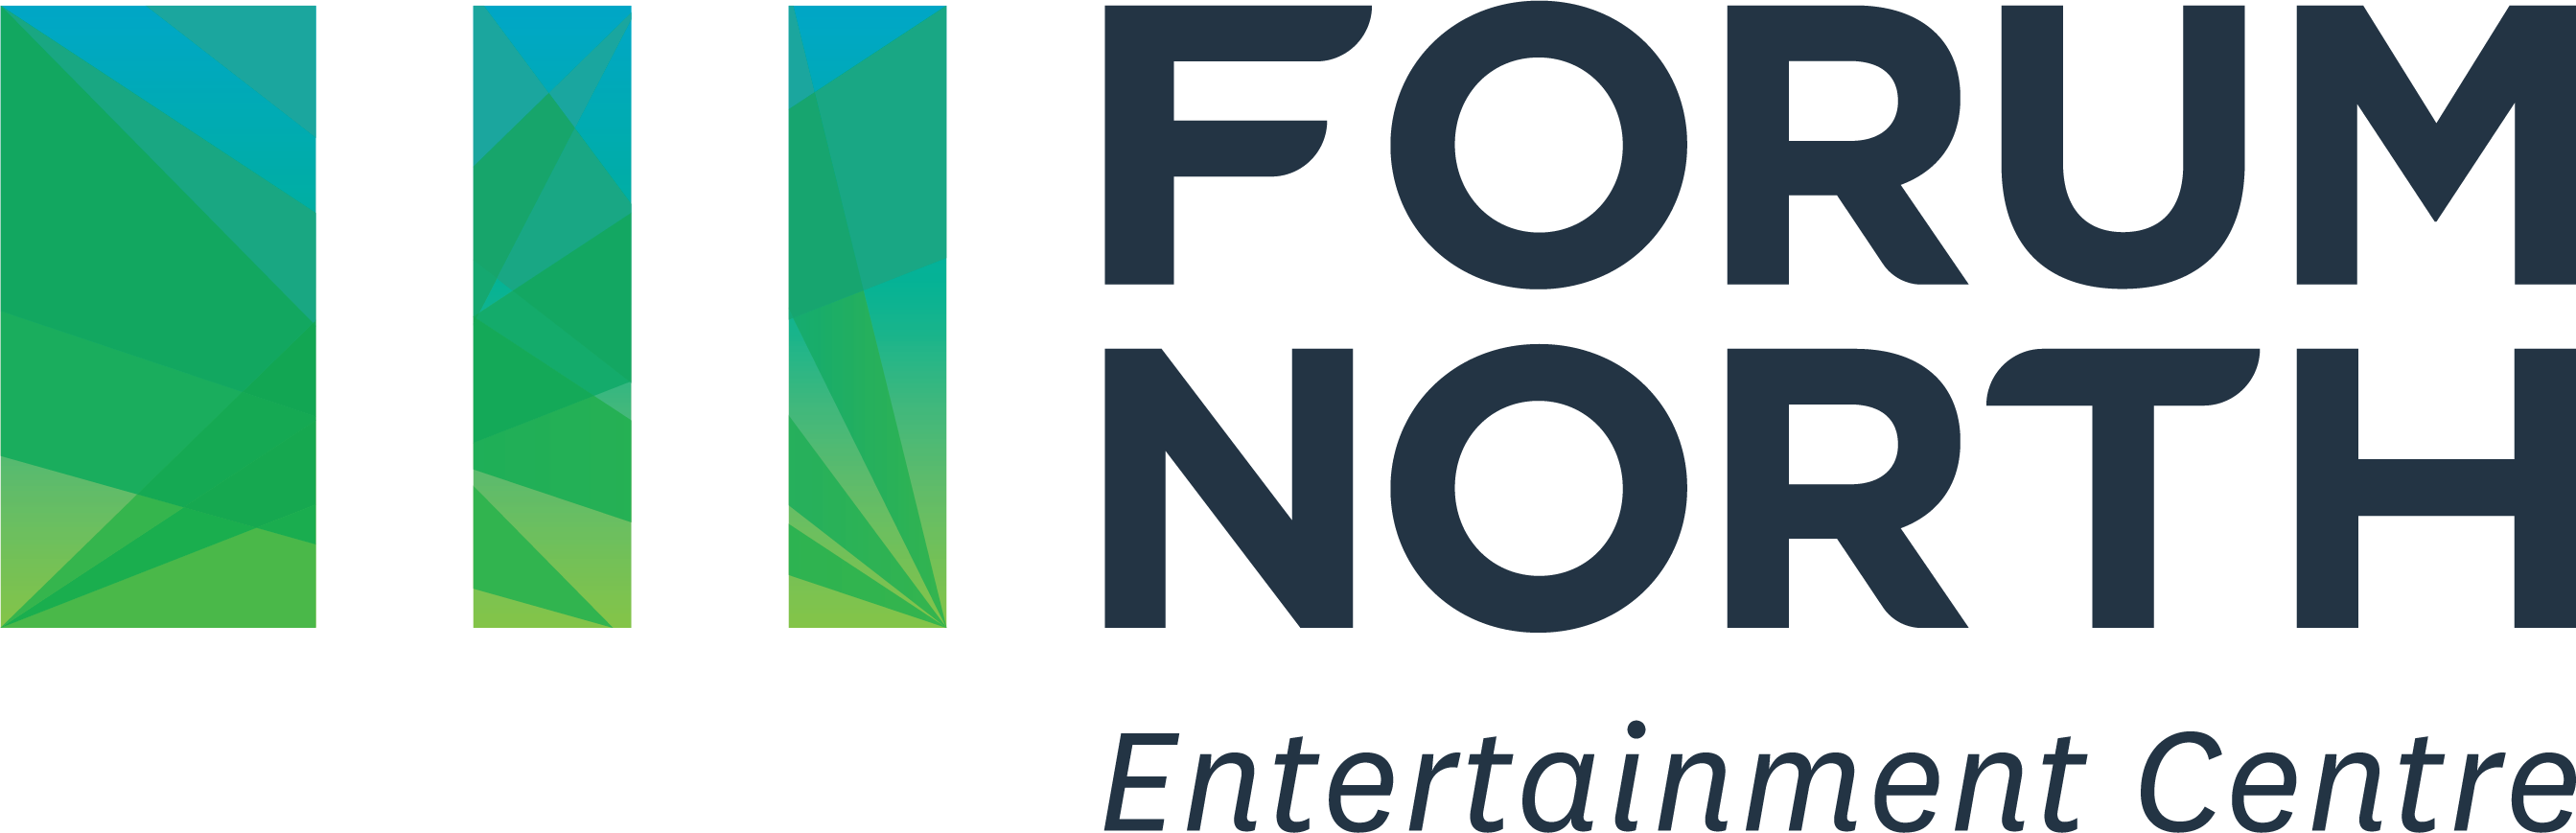 
Forum North